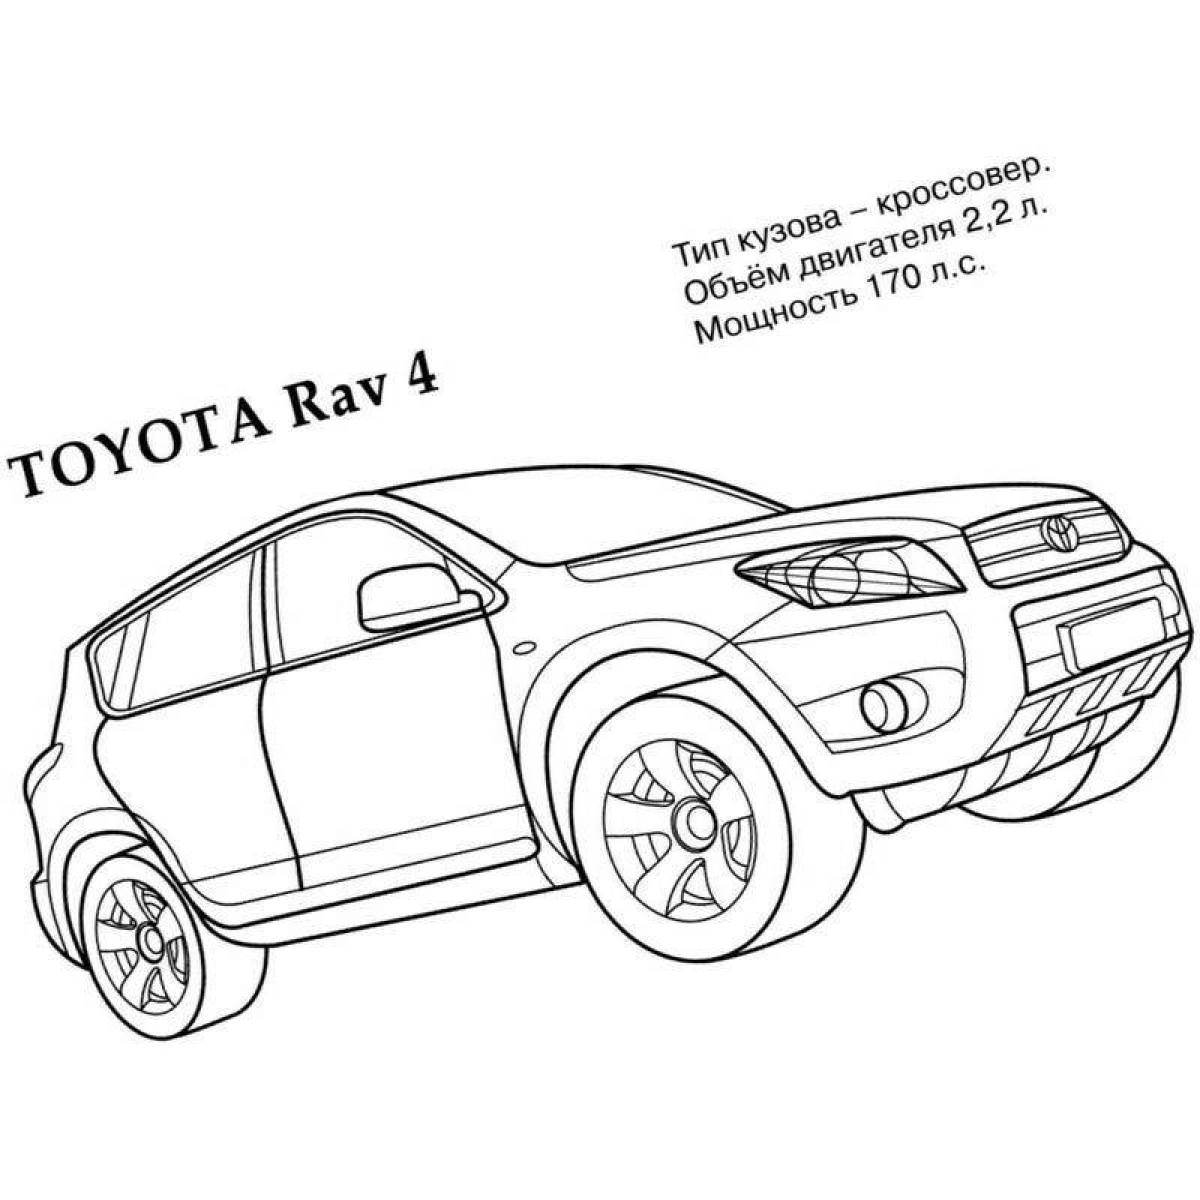 Рисунок рав. Раскраски машины Тойота рав 4. Раскраска Toyota rav4. Раскраска рав 4. Разукрашки машины Toyota RAV 4.